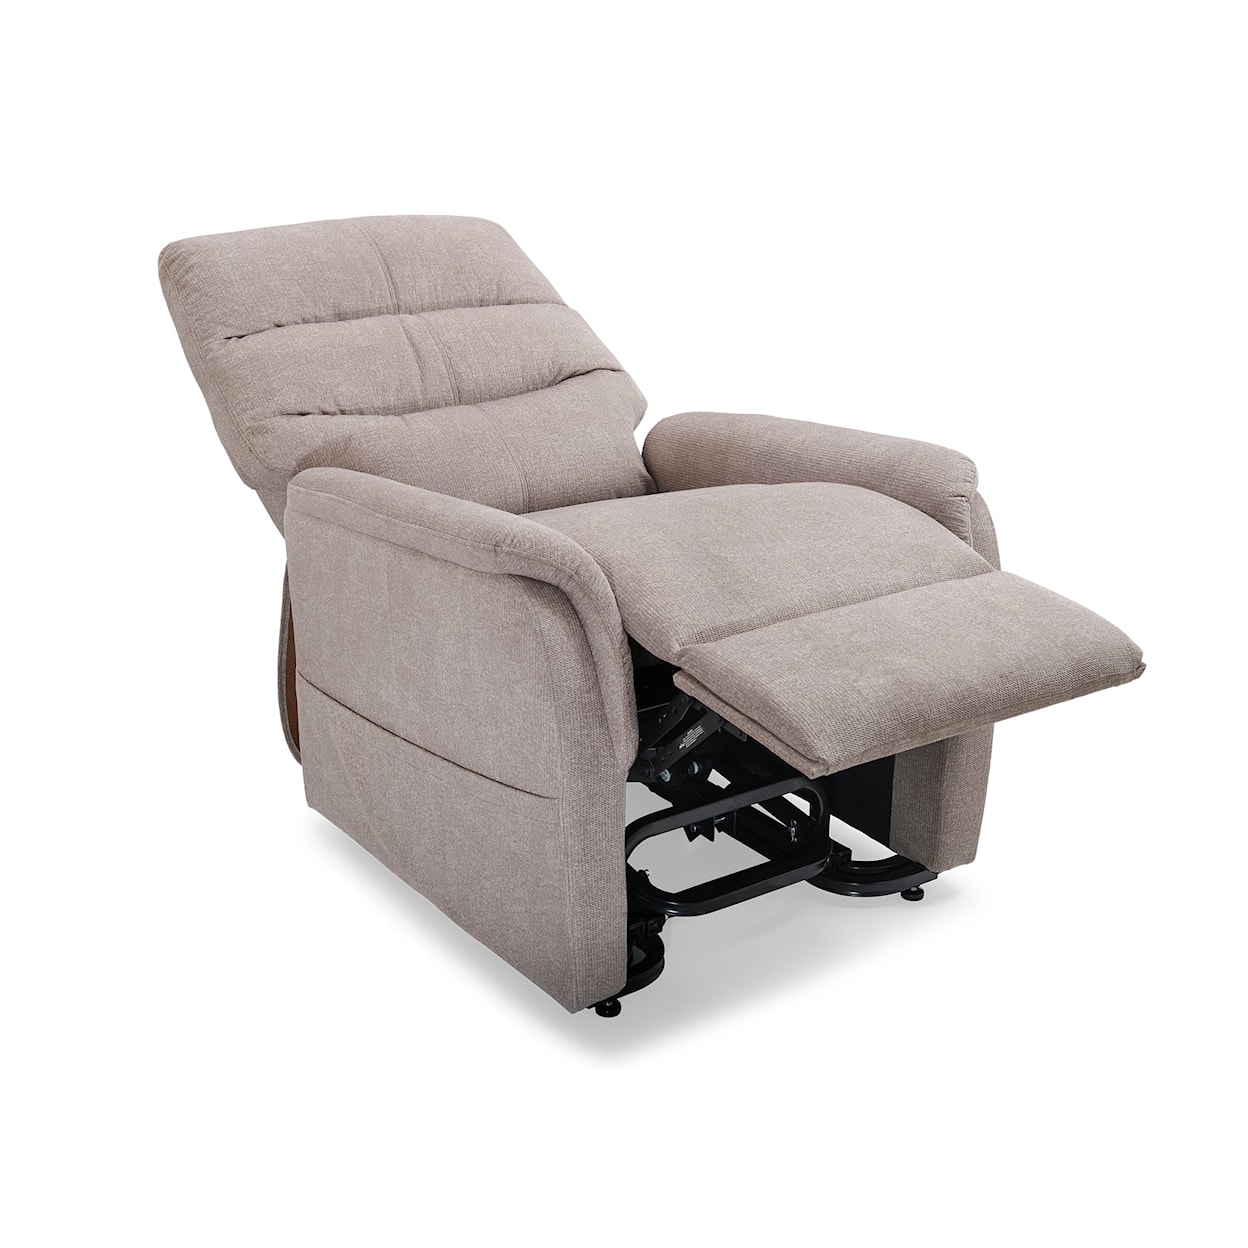 UltraComfort Destin Large Power Lift Chair Recliner